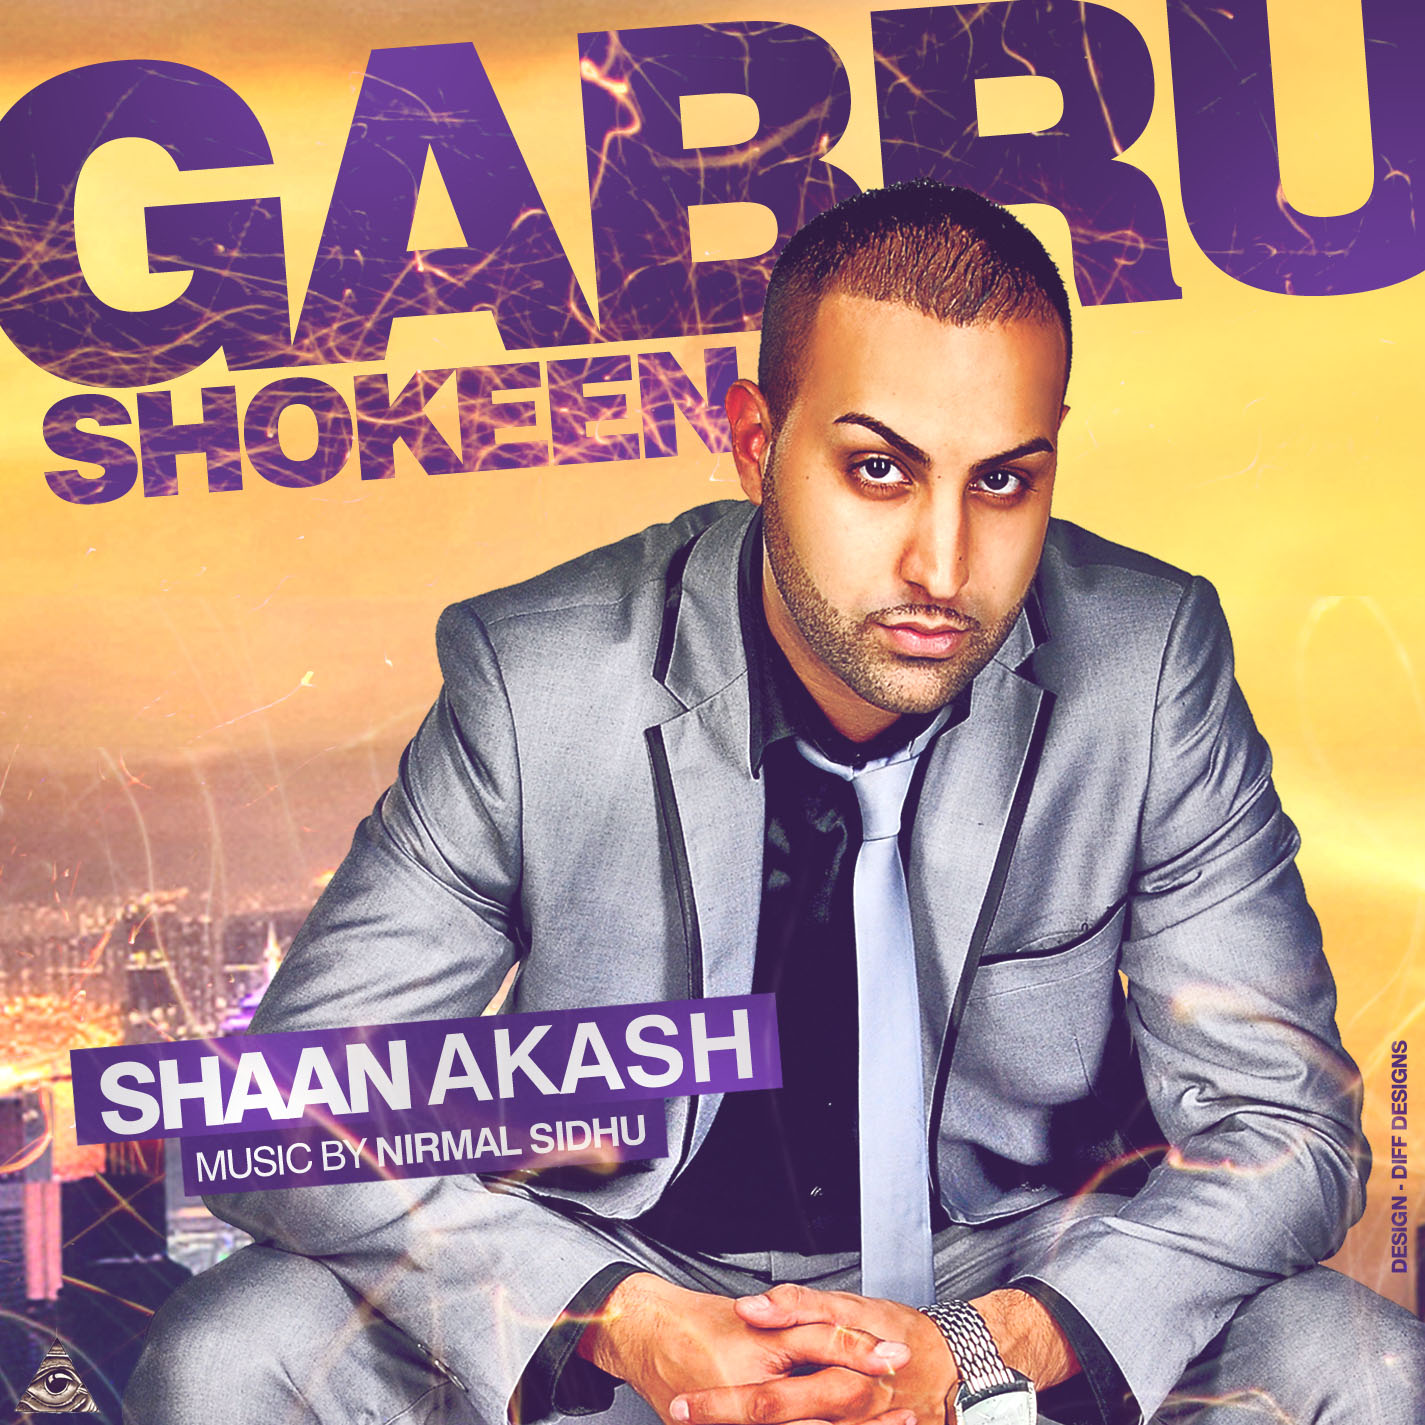 Photo of Shaan Akash’s single ‘Gabro Shokeen’ (Full Video)